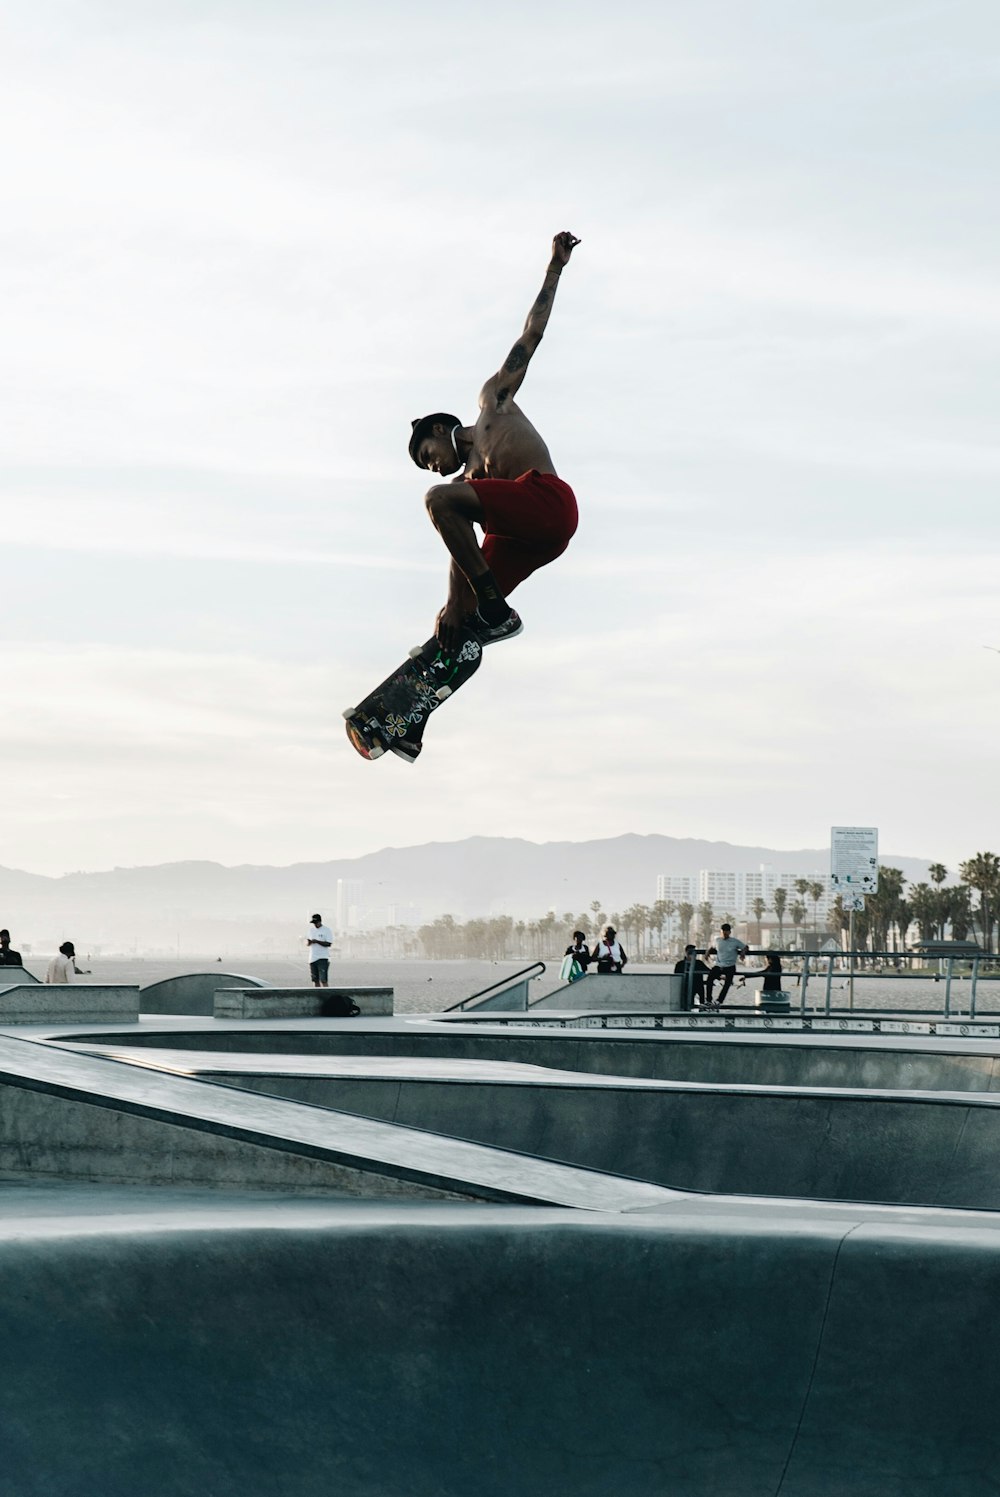 Skateboard Trick Pictures [HD] | Download Free Images on Unsplash